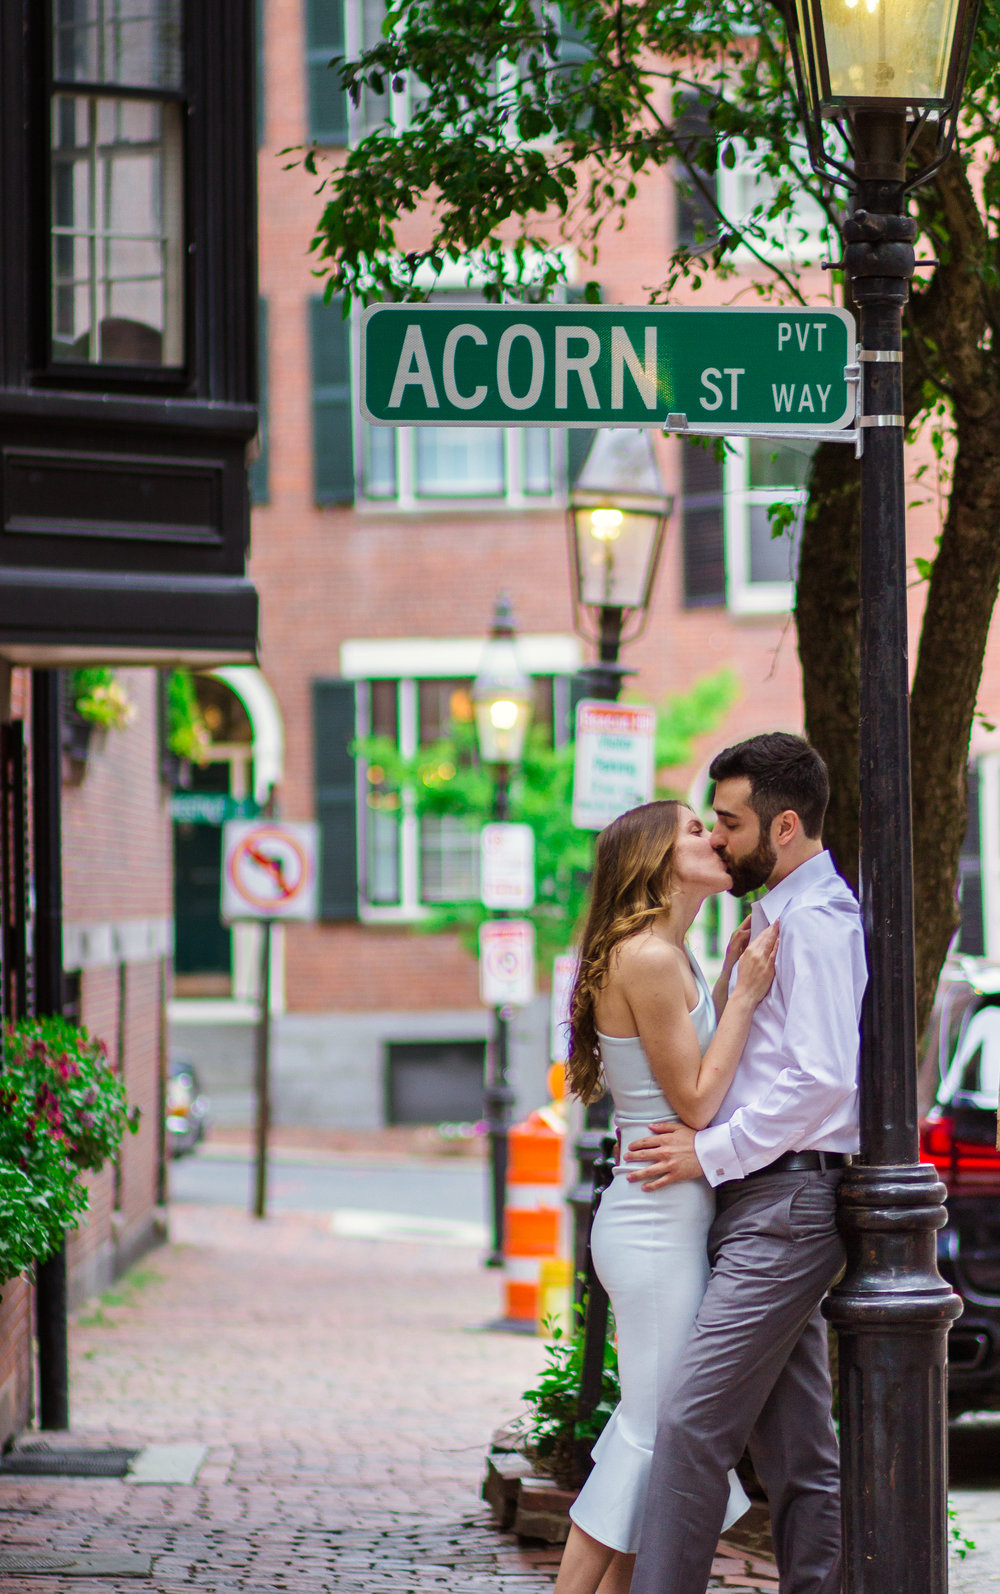 Acorn Street Engagement Session ~ Andrew & Nicole - Boston MA